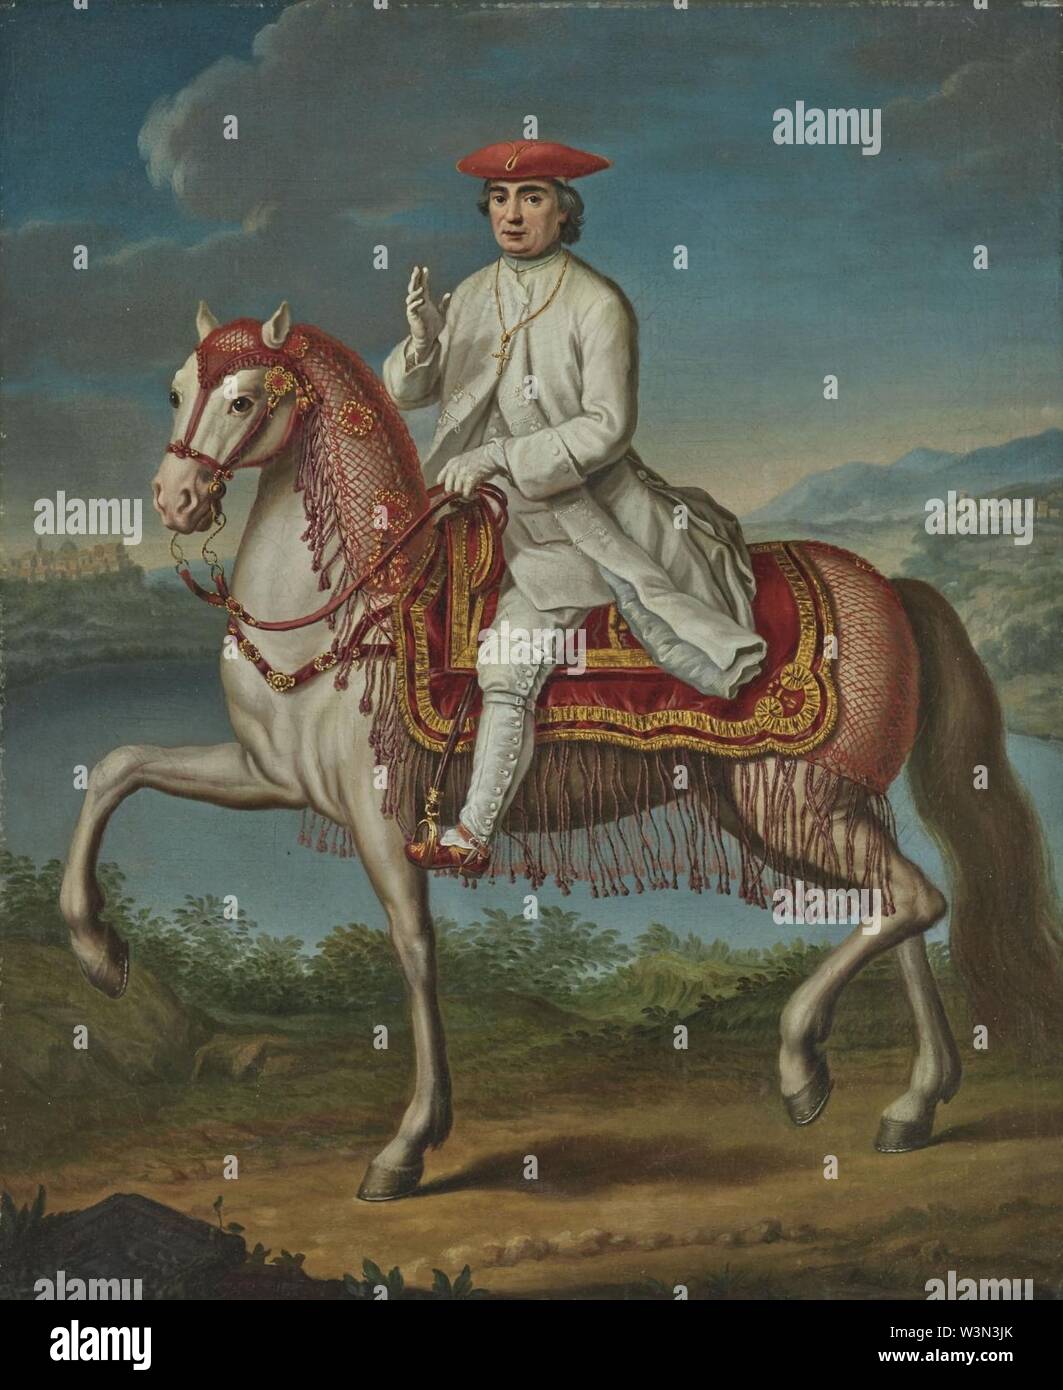 Clemente XIV a Cavallo di Fronte a Castelgandolfo. Stockfoto